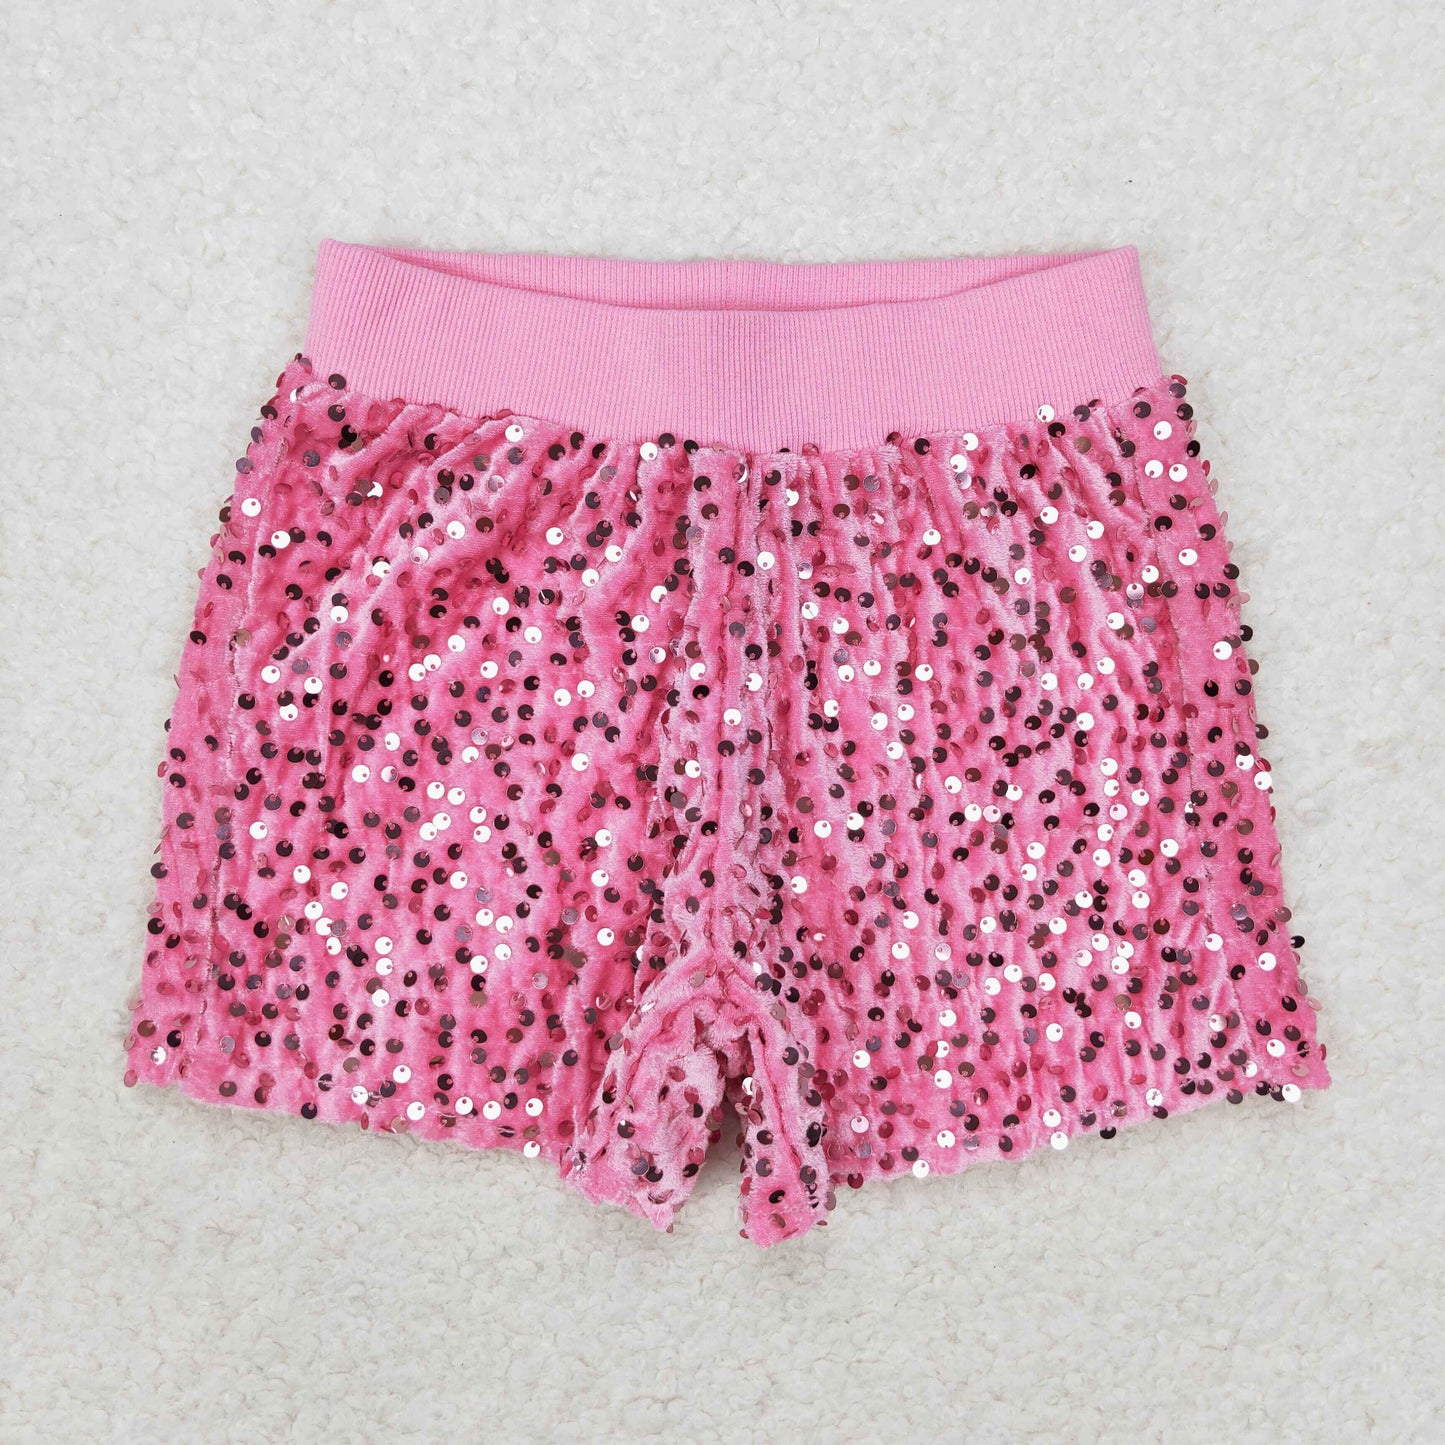 GSSO1423 Singer Swiftie ERAS TOUR Top Pink Sequin Shorts Girls Summer Clothes Sets